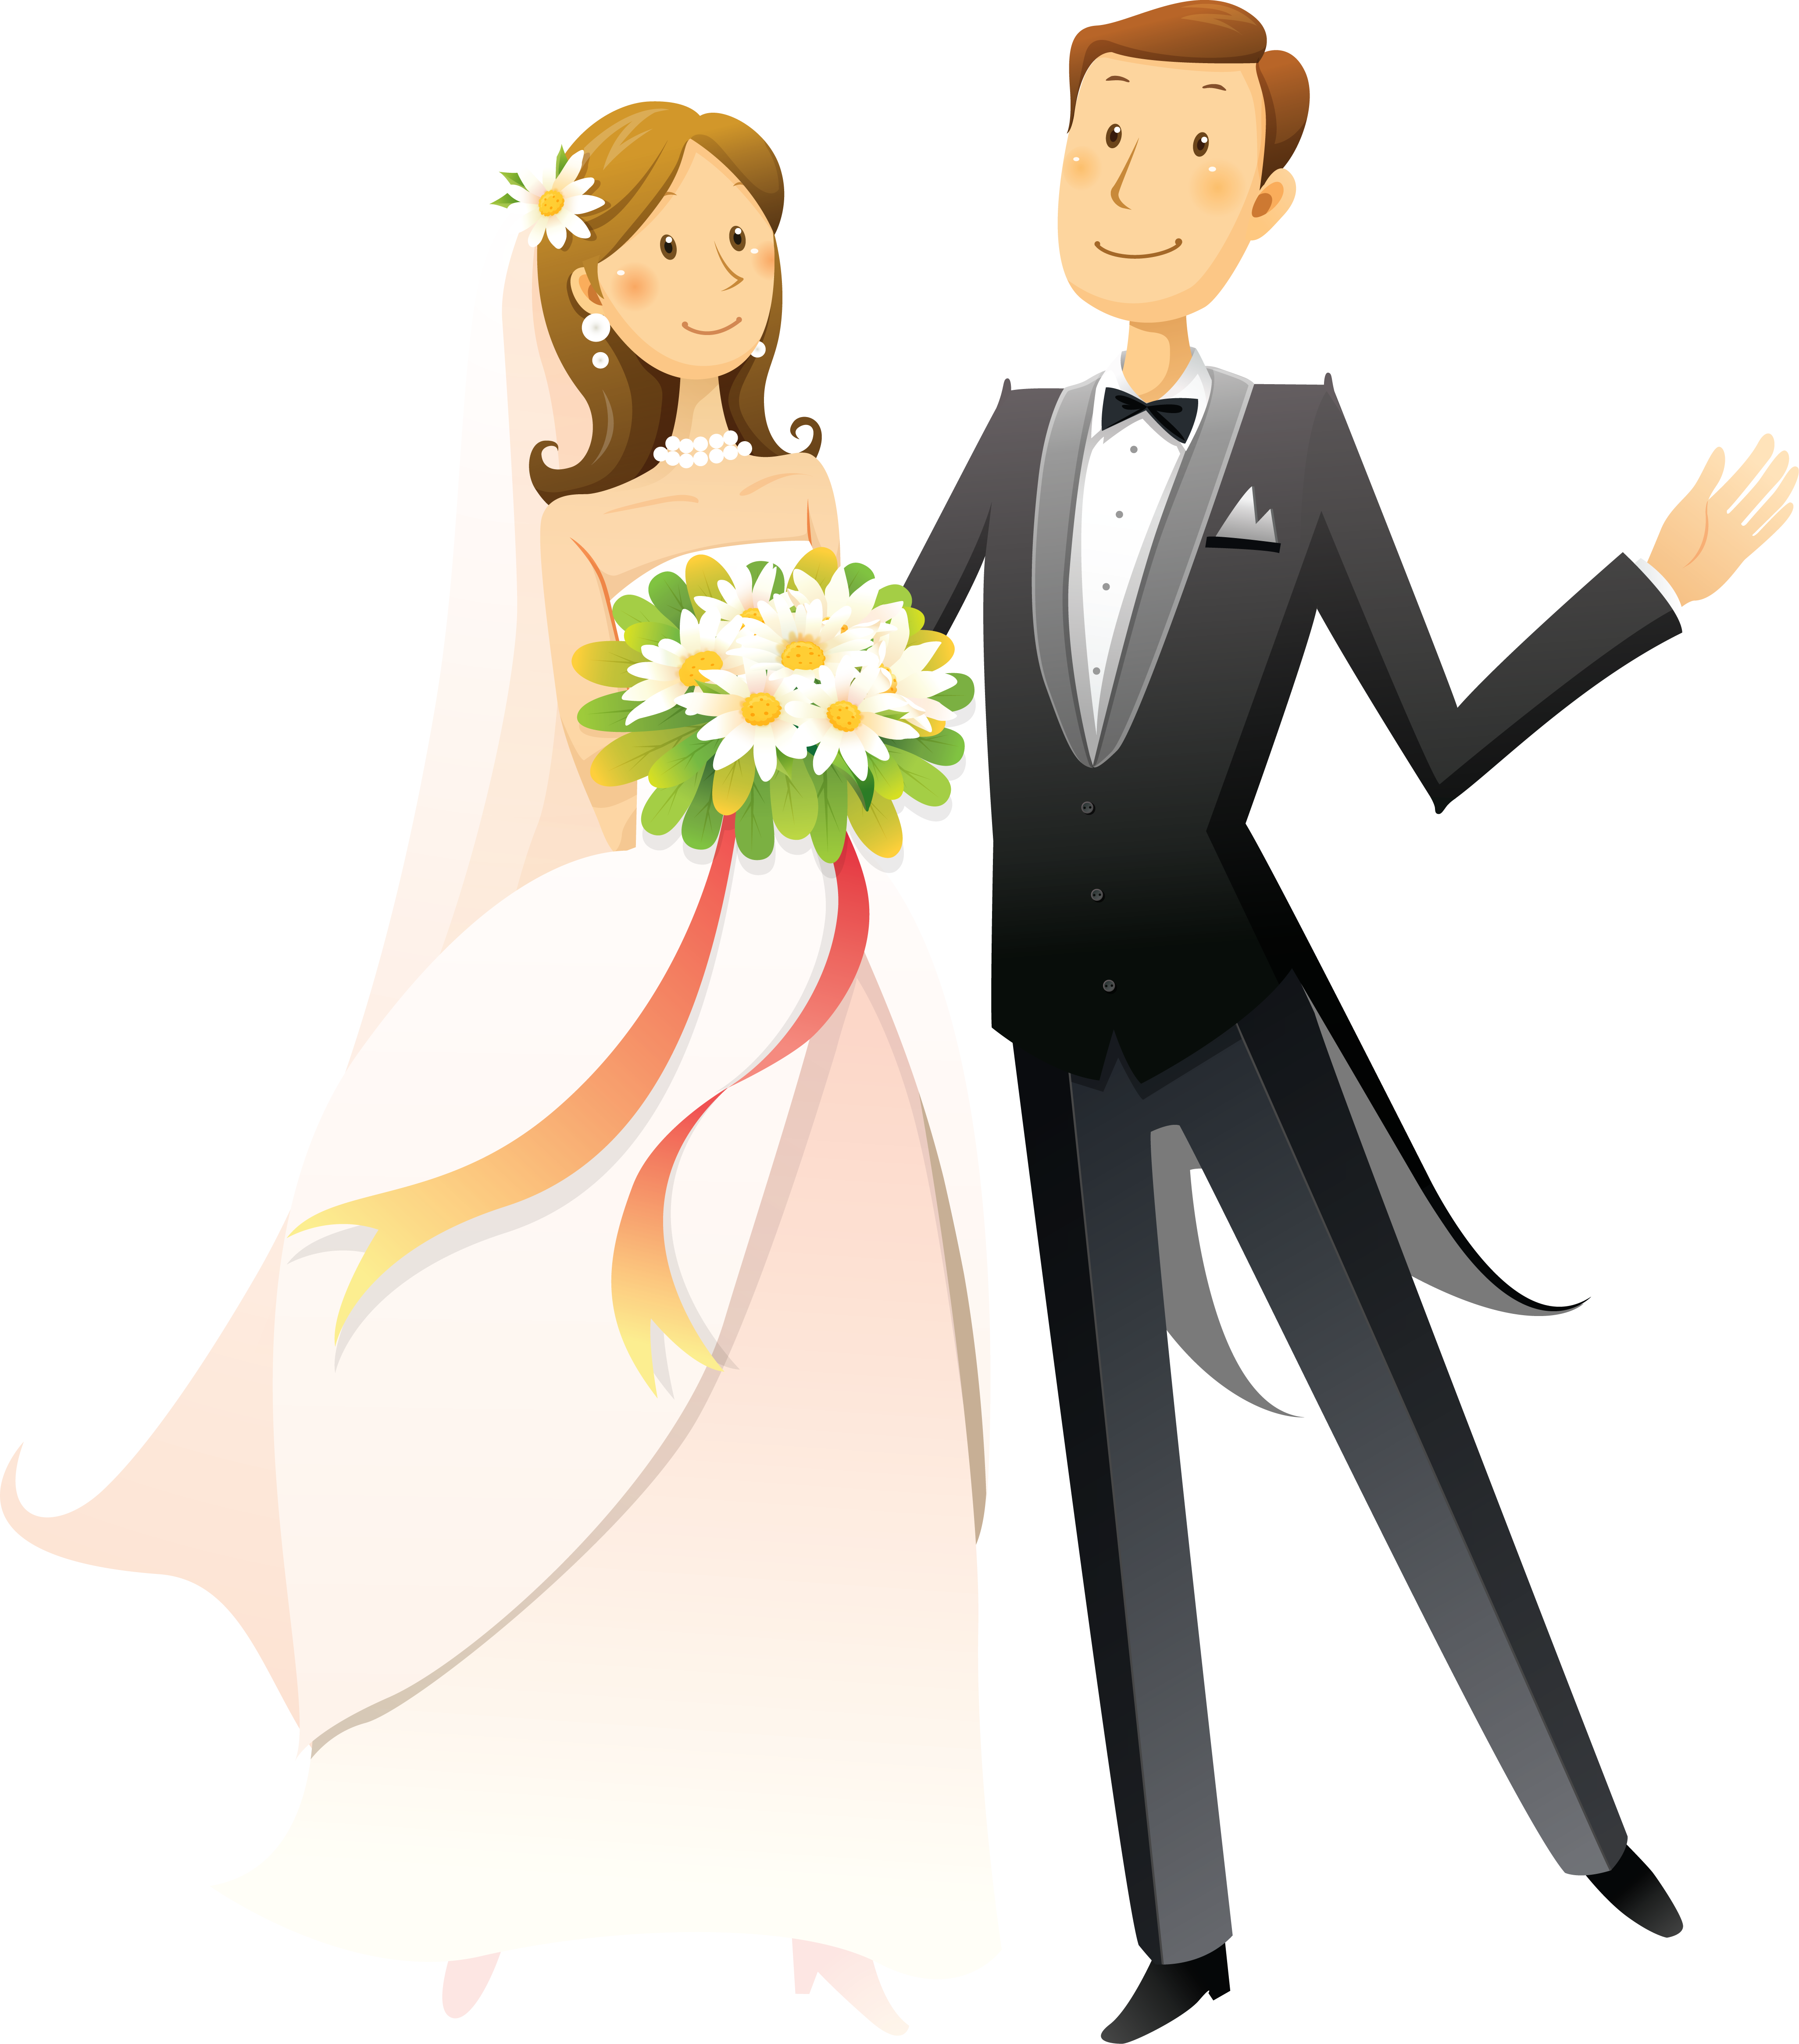 Marriage wife. Жених и невеста. Жених и невеста картинки. Векторные жених и невеста. Свадьба мультяшные.